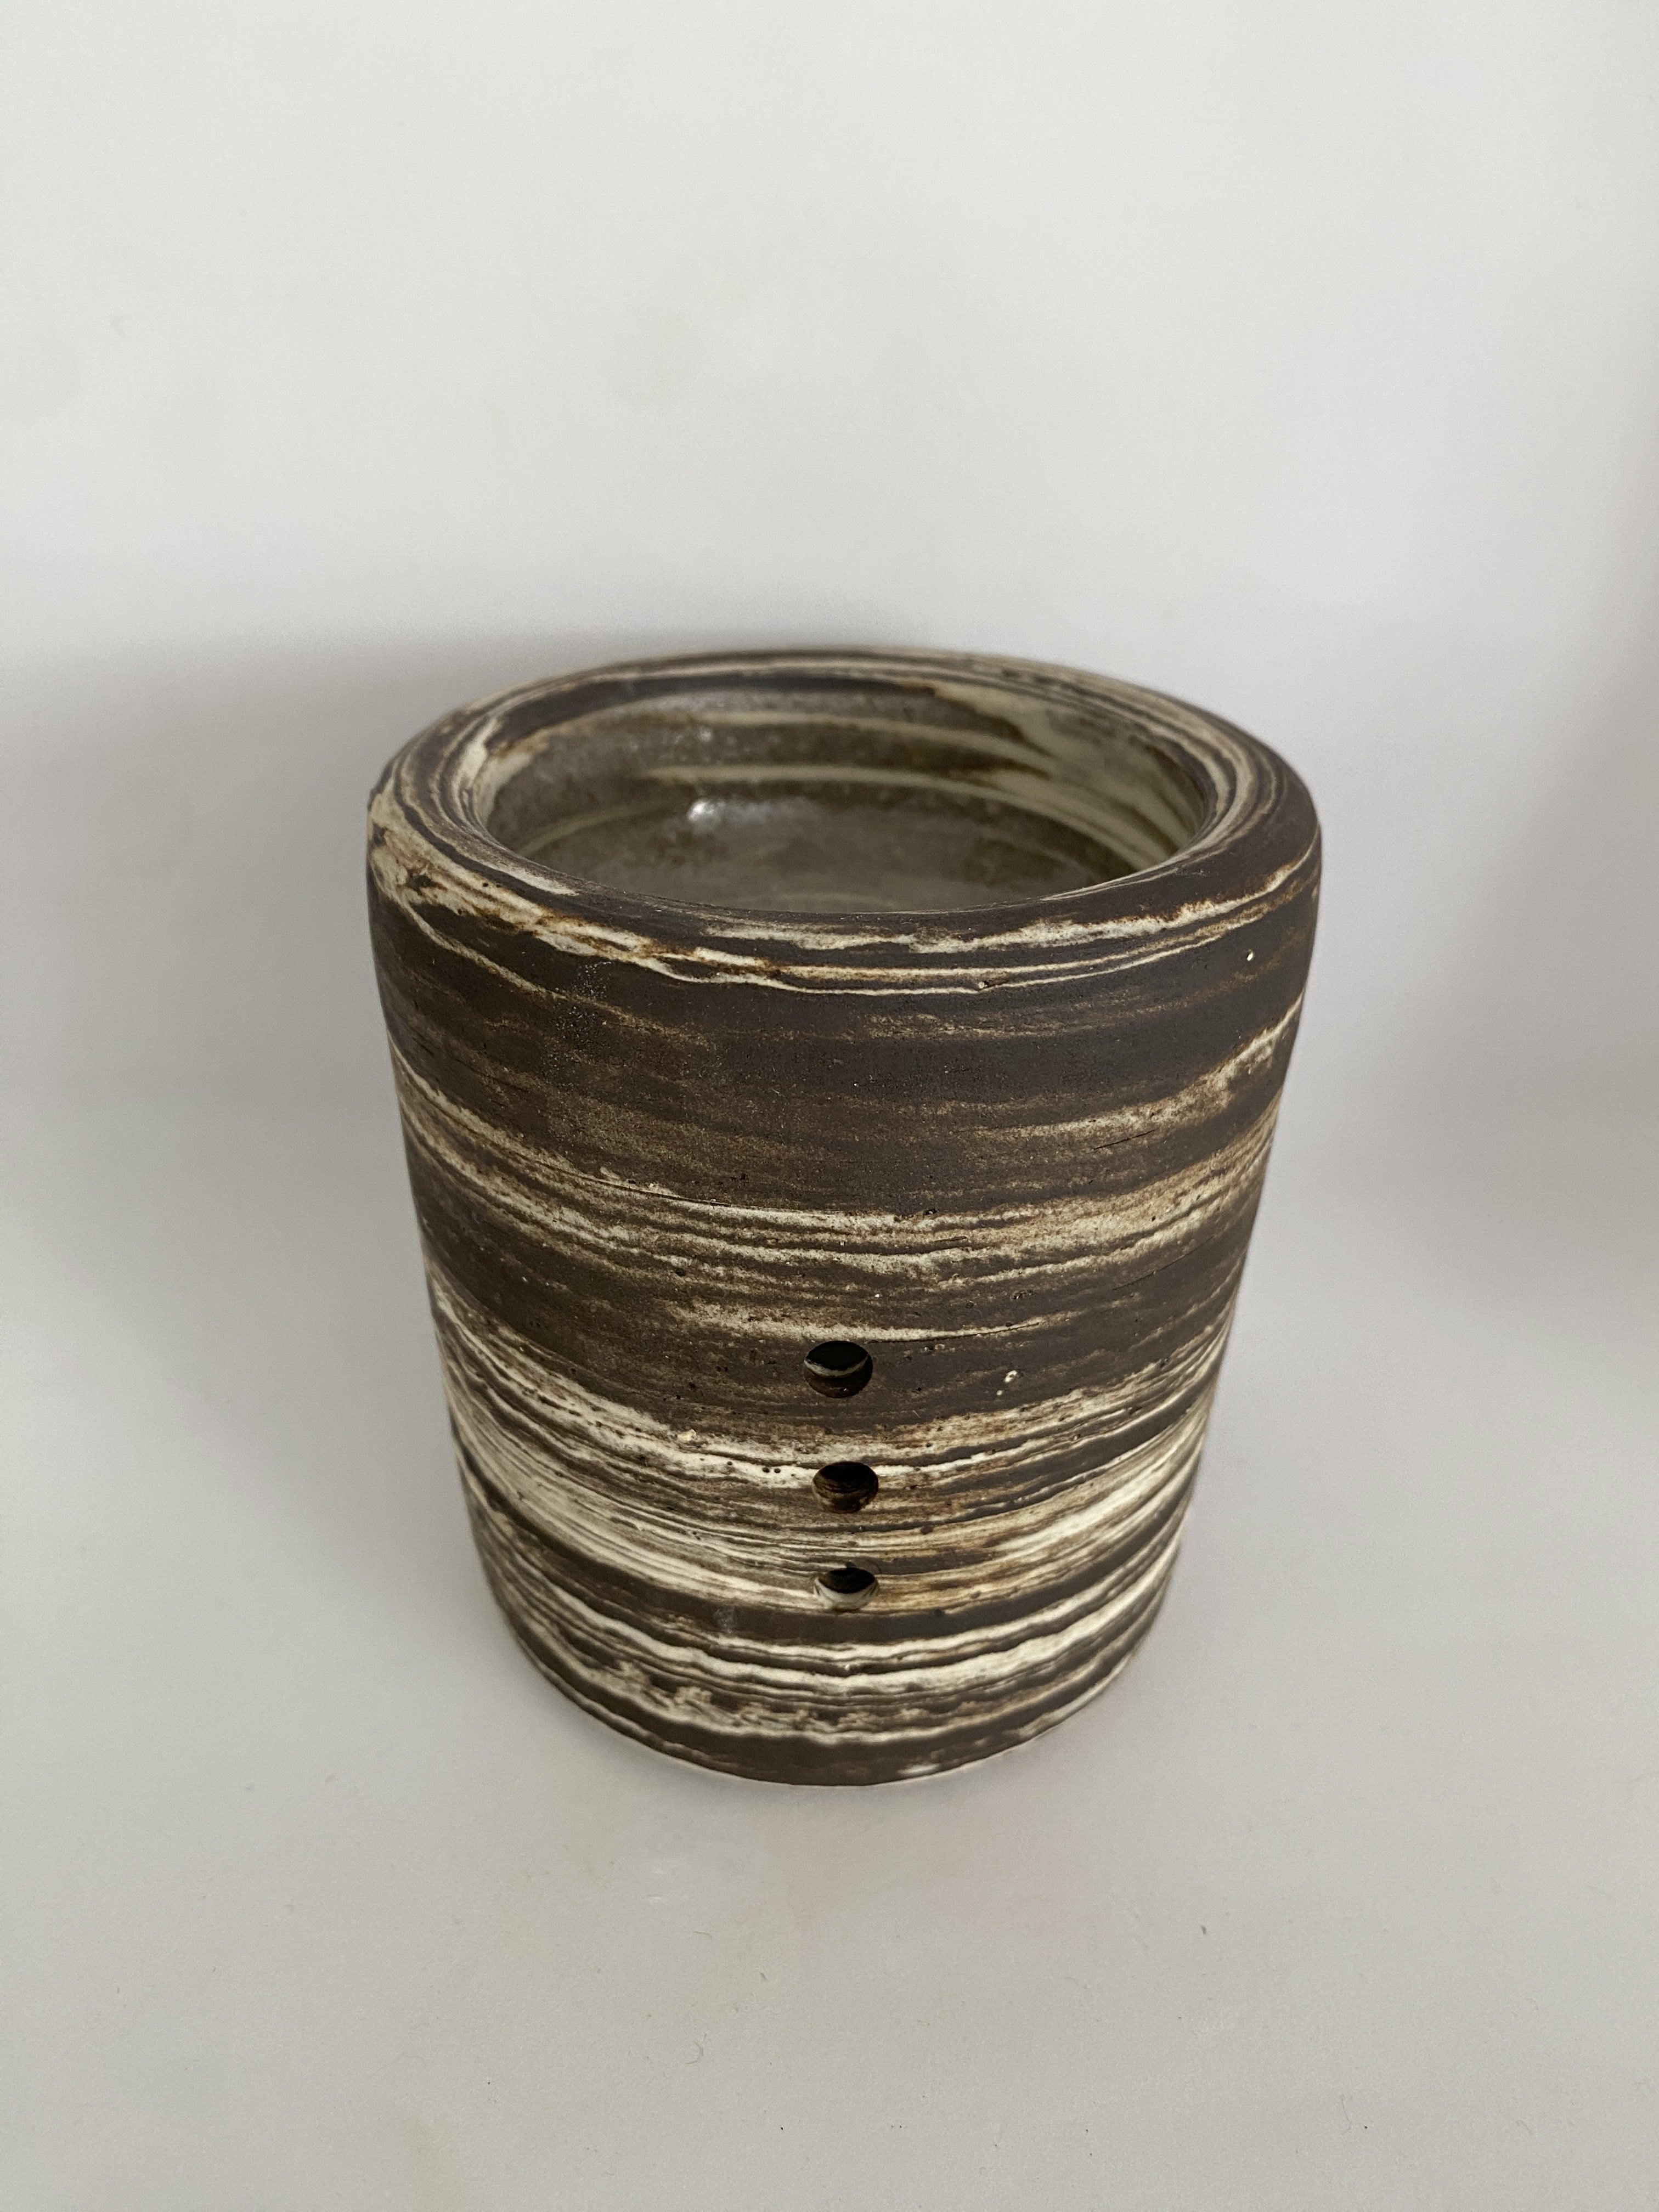 Ceramic Oil Burner / Wax Melter | #4B | by Emporium Julium - Lifestory